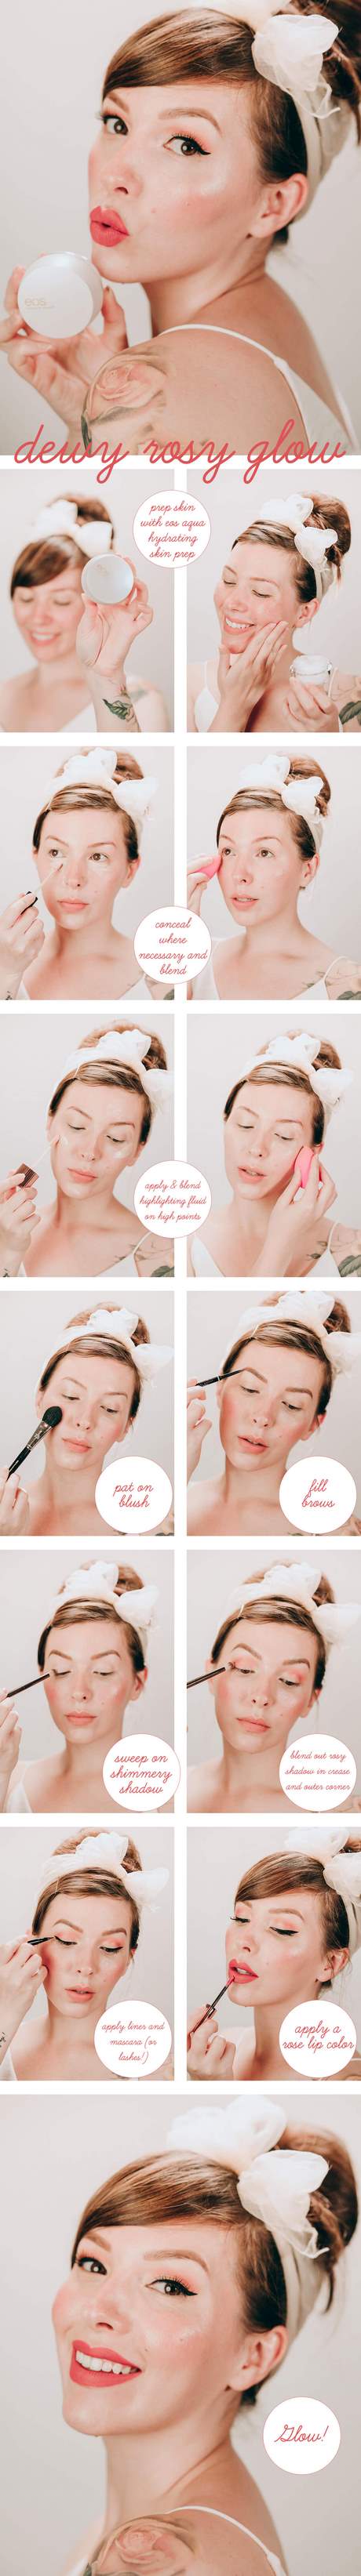 dewy-glow-makeup-tutorial-93_2 Dewy glow make-up tutorial